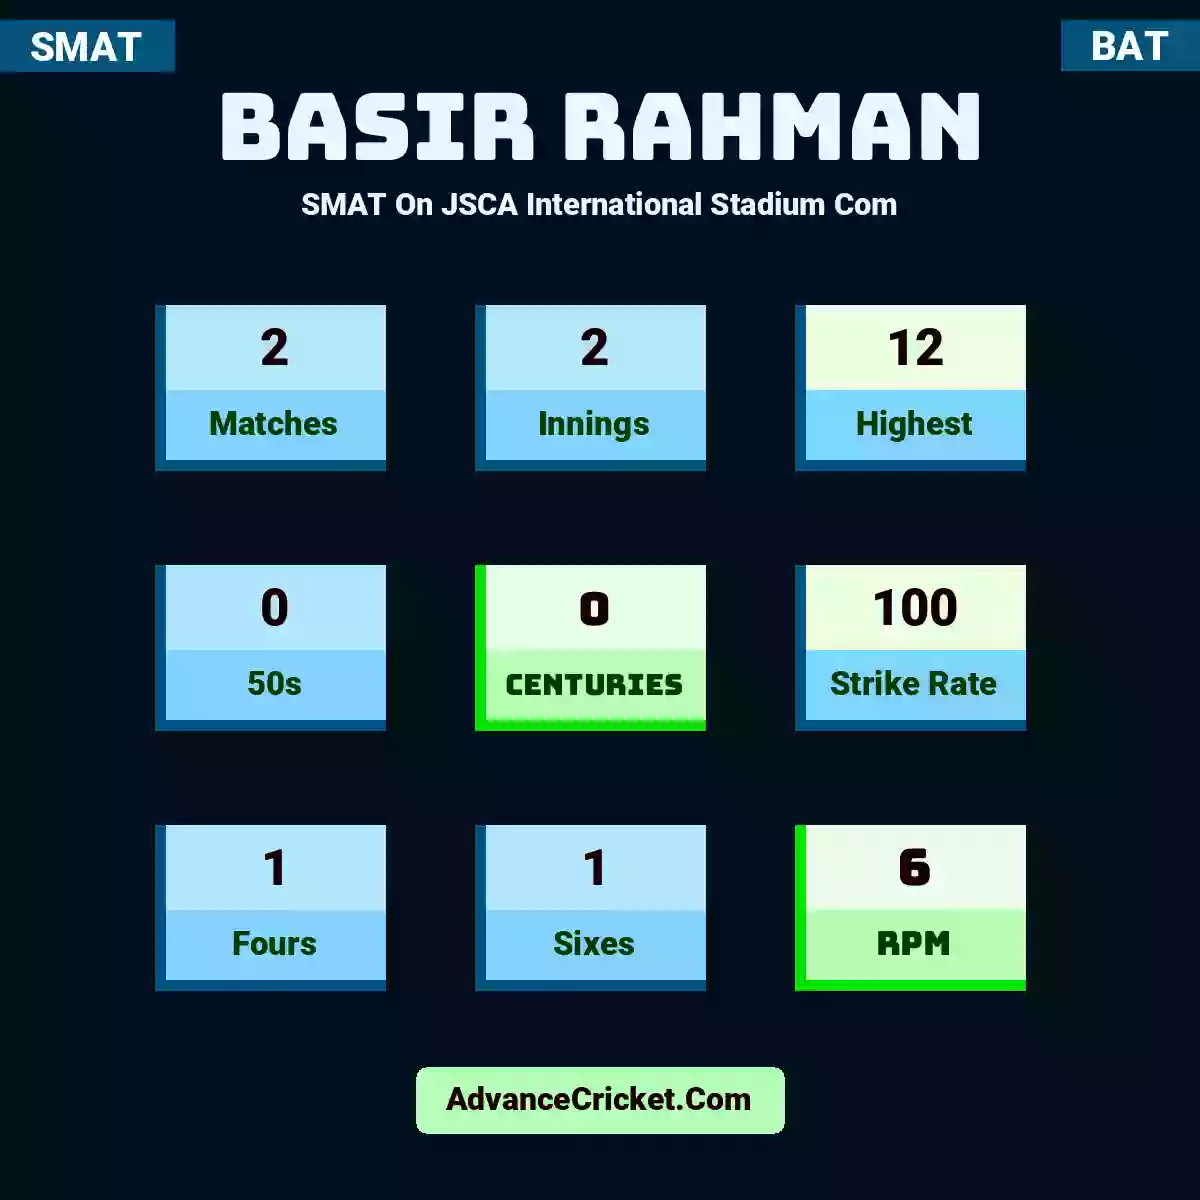 Basir Rahman SMAT  On JSCA International Stadium Com, Basir Rahman played 2 matches, scored 12 runs as highest, 0 half-centuries, and 0 centuries, with a strike rate of 100. B.Rahman hit 1 fours and 1 sixes, with an RPM of 6.